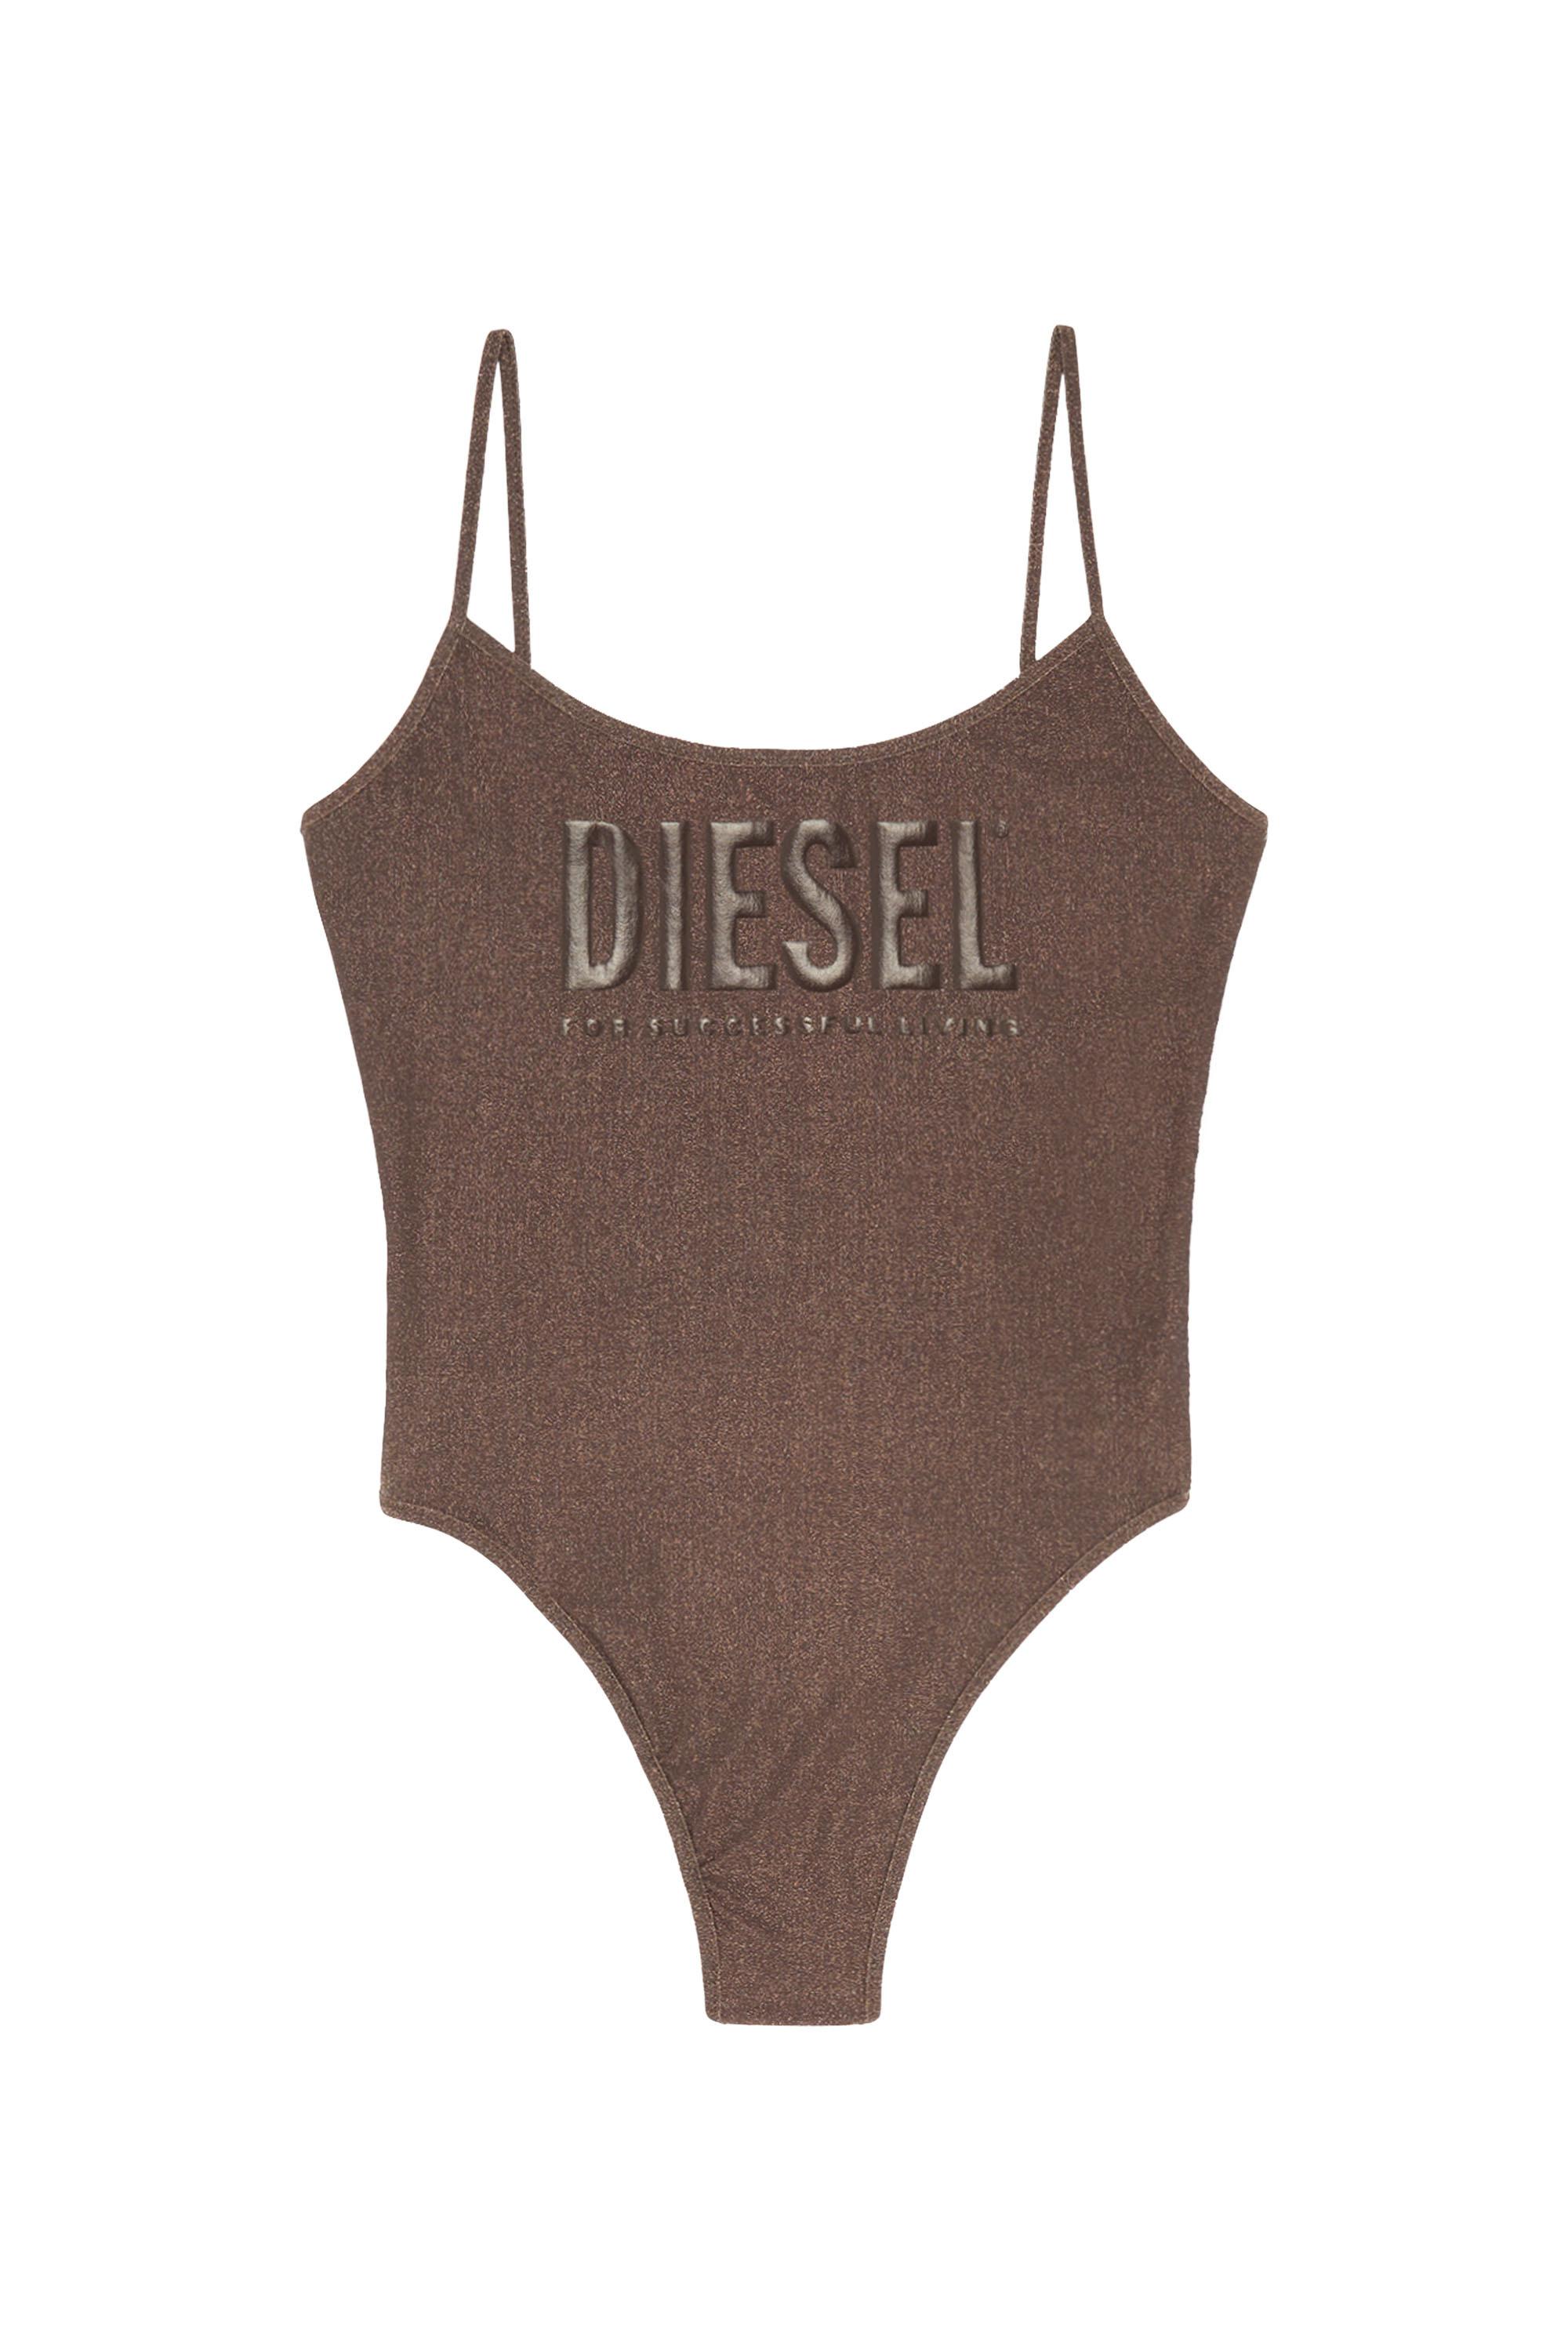 Diesel - BFSW-GRETEL, Brown - Image 2